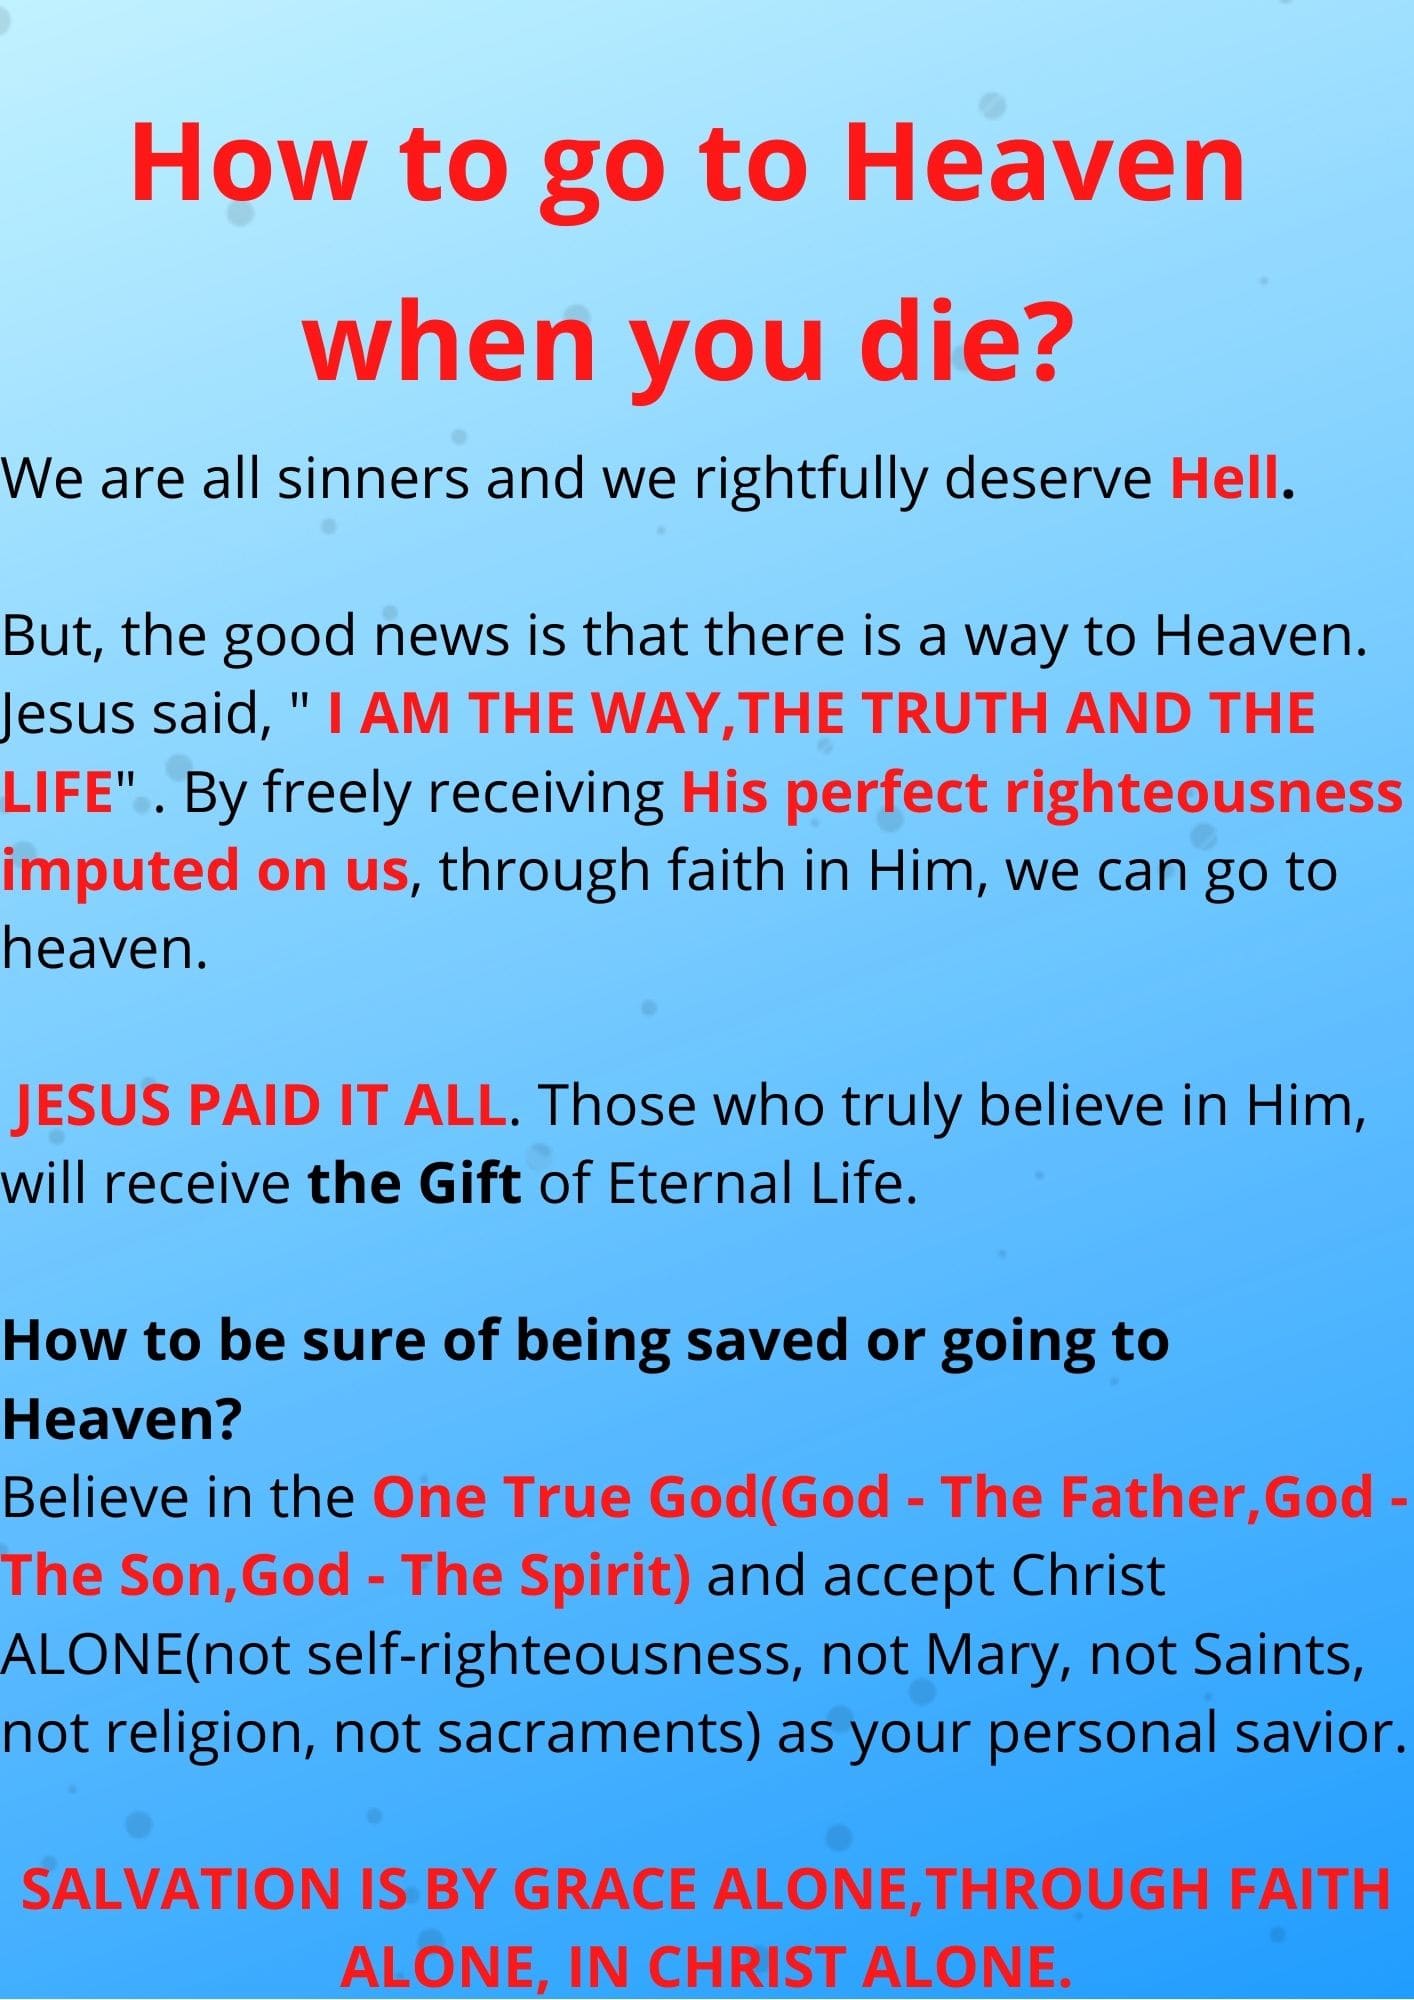 free-printable-gospel-tracts